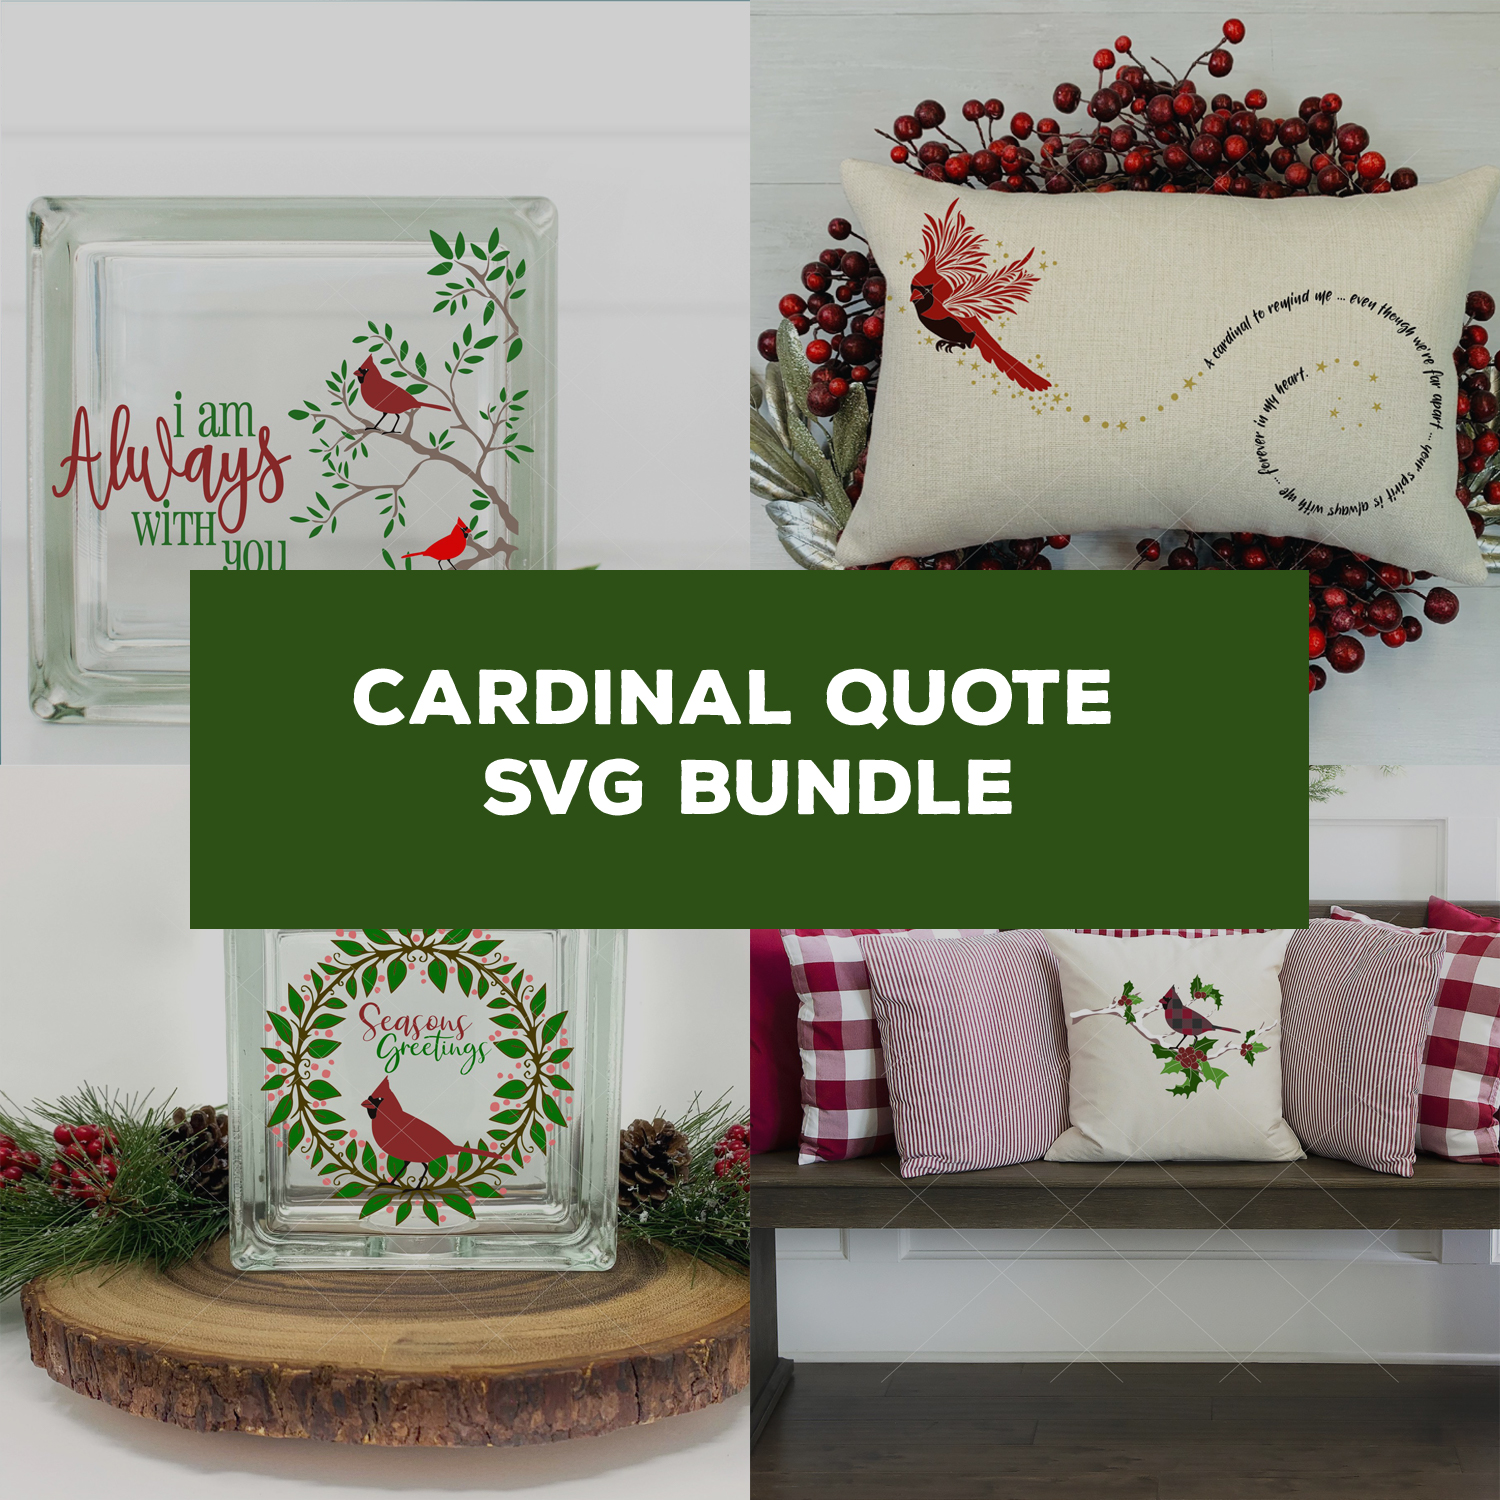 Cardinal quote svg bundle.